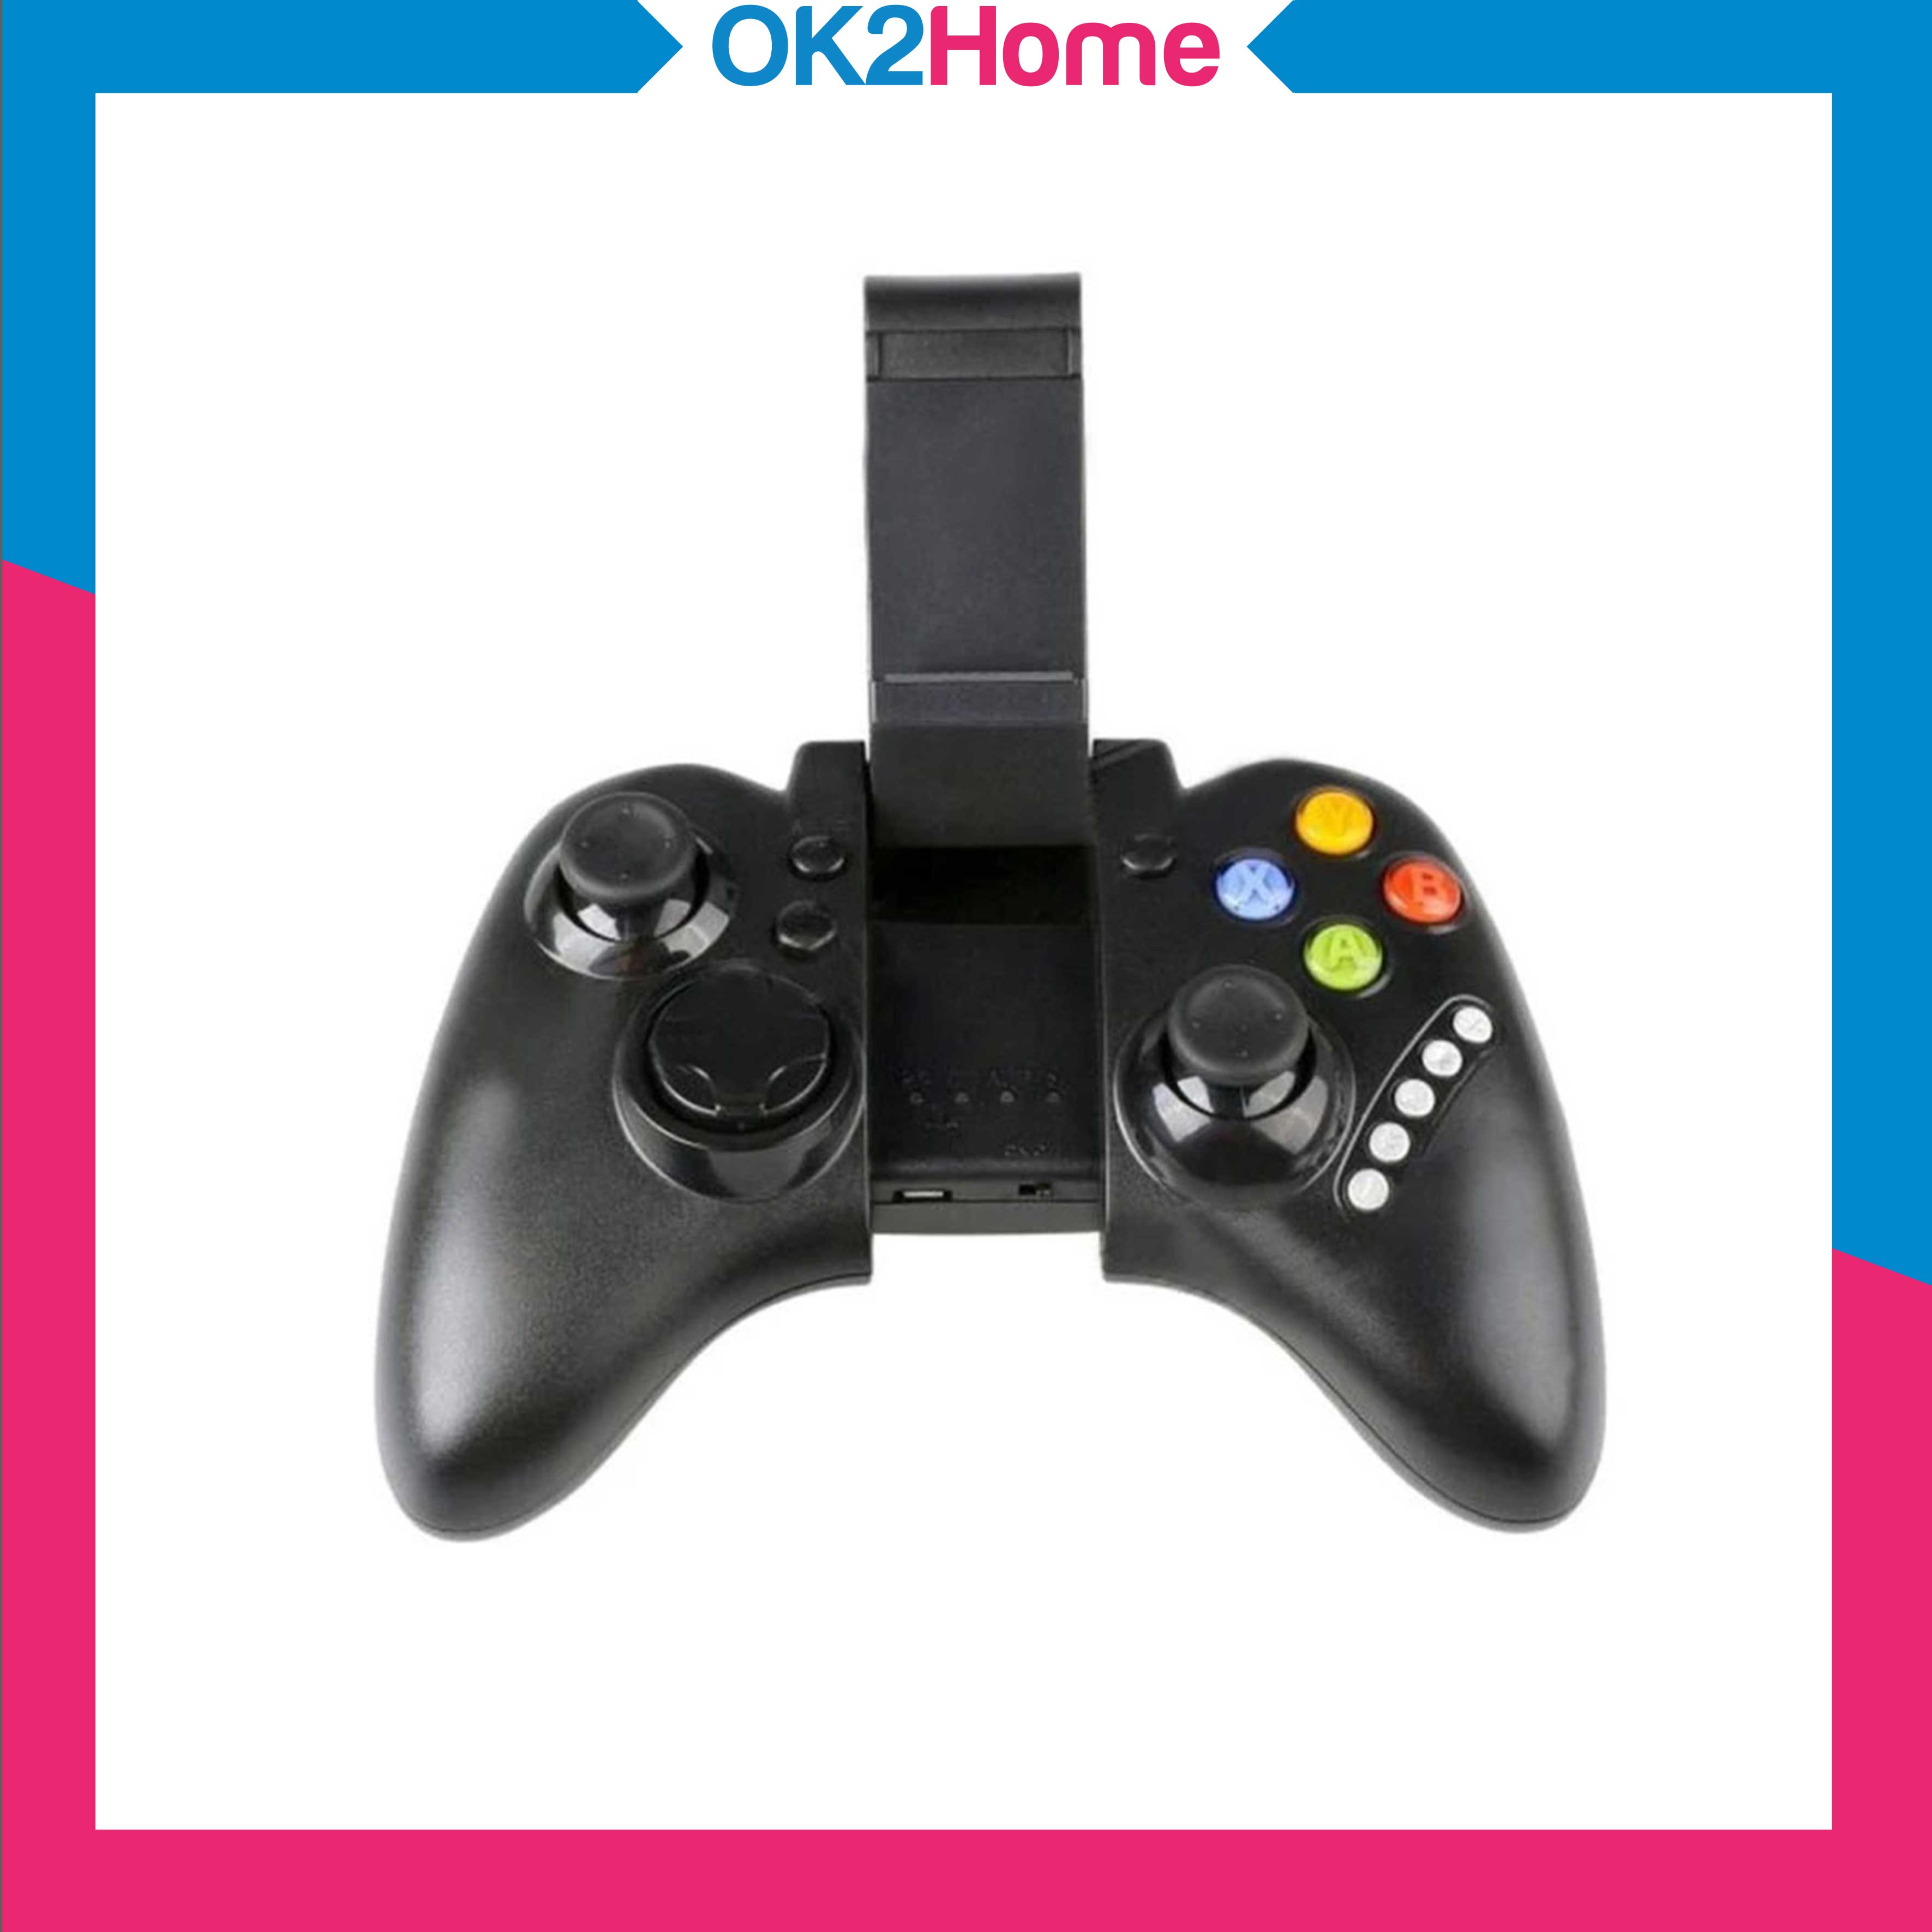 OKER PG-9021 Gaming Joy Bluetoothจอยเกมส์บลูทูธ สำหรับมือถือ/คอมพิวเตอร์